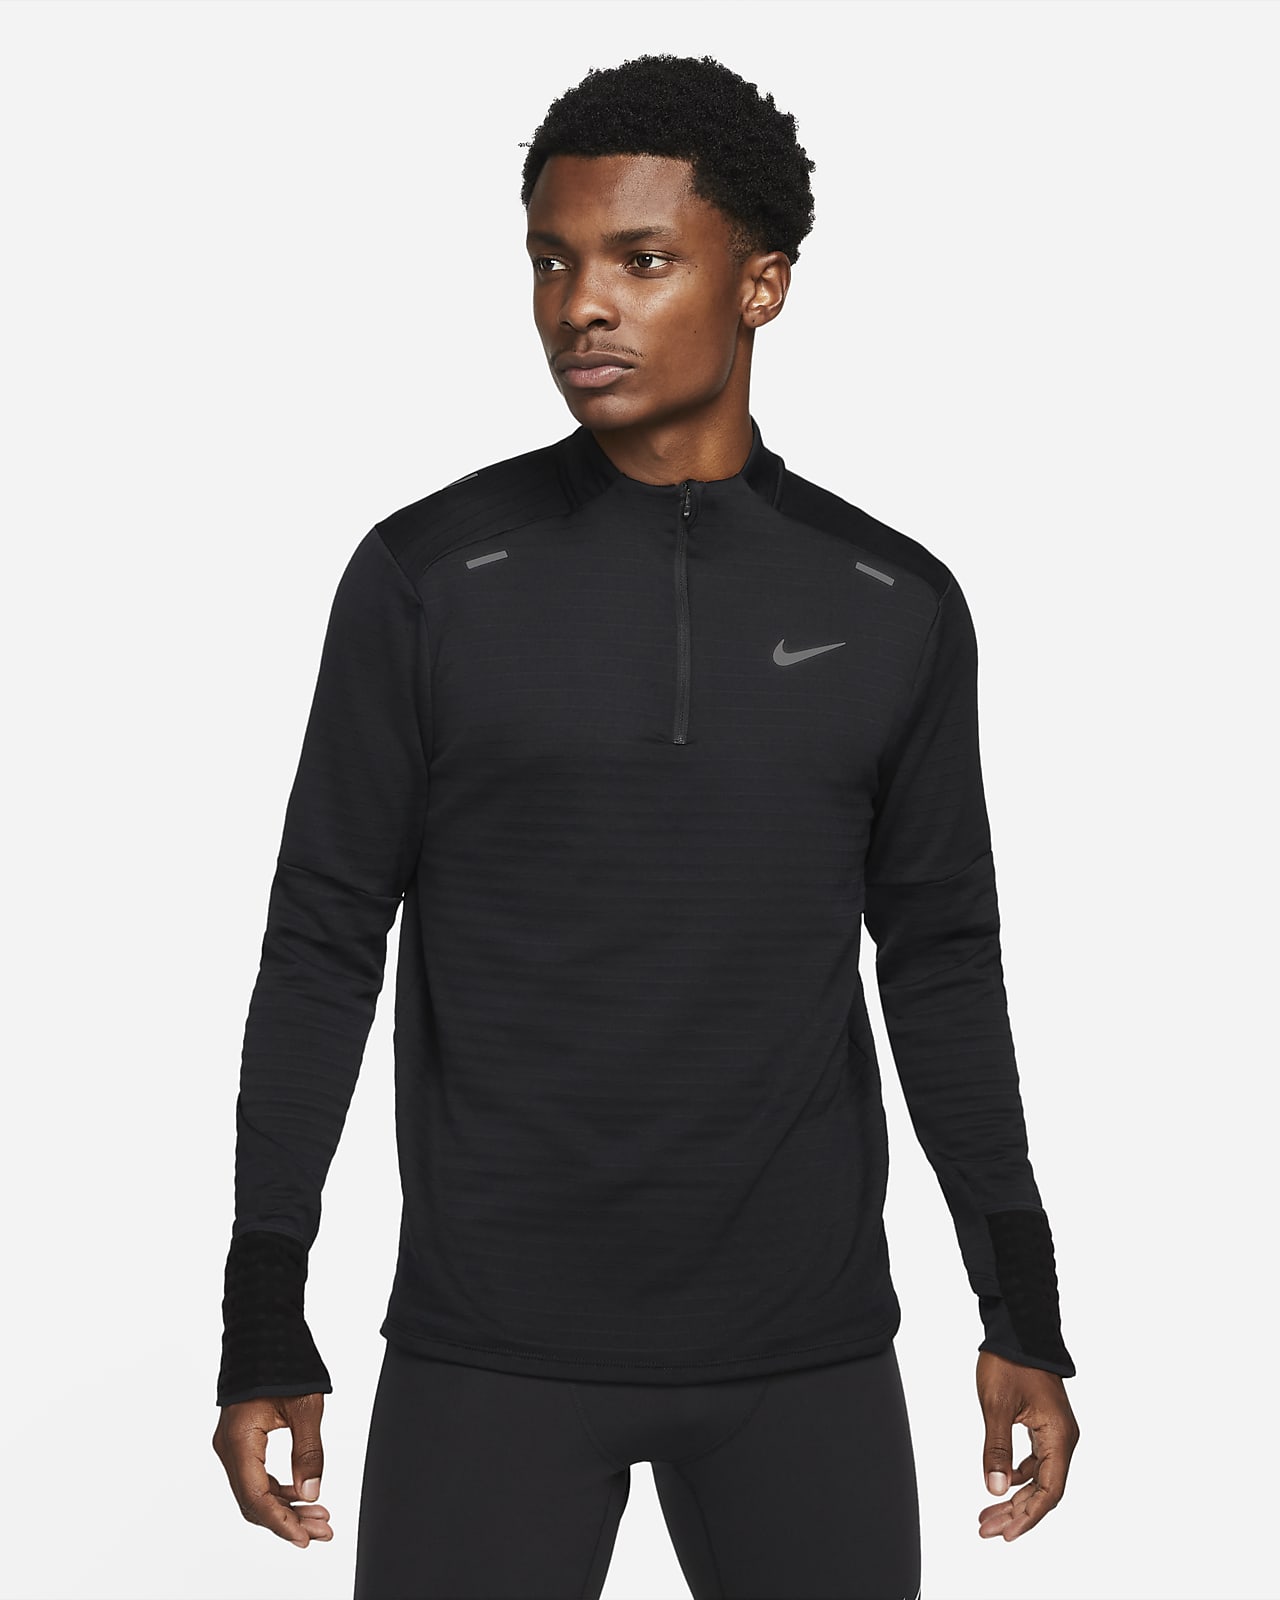 Nike Therma-FIT Repel rövid cipzáras férfi futófelső